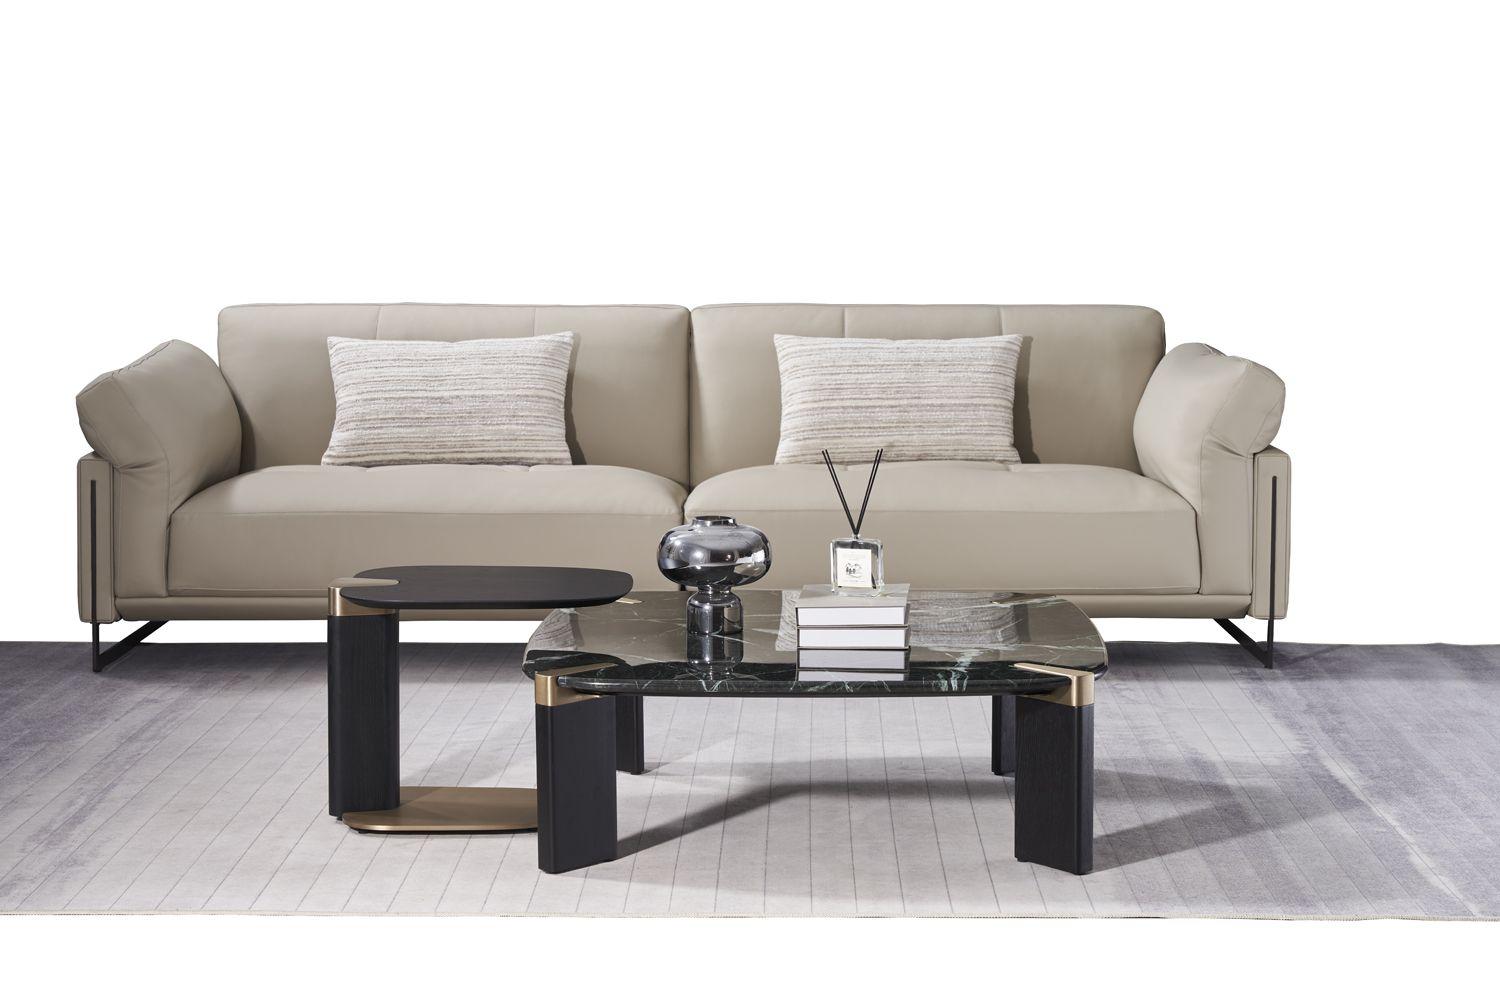 American Eagle Furniture CT-J3133 Coffee Table